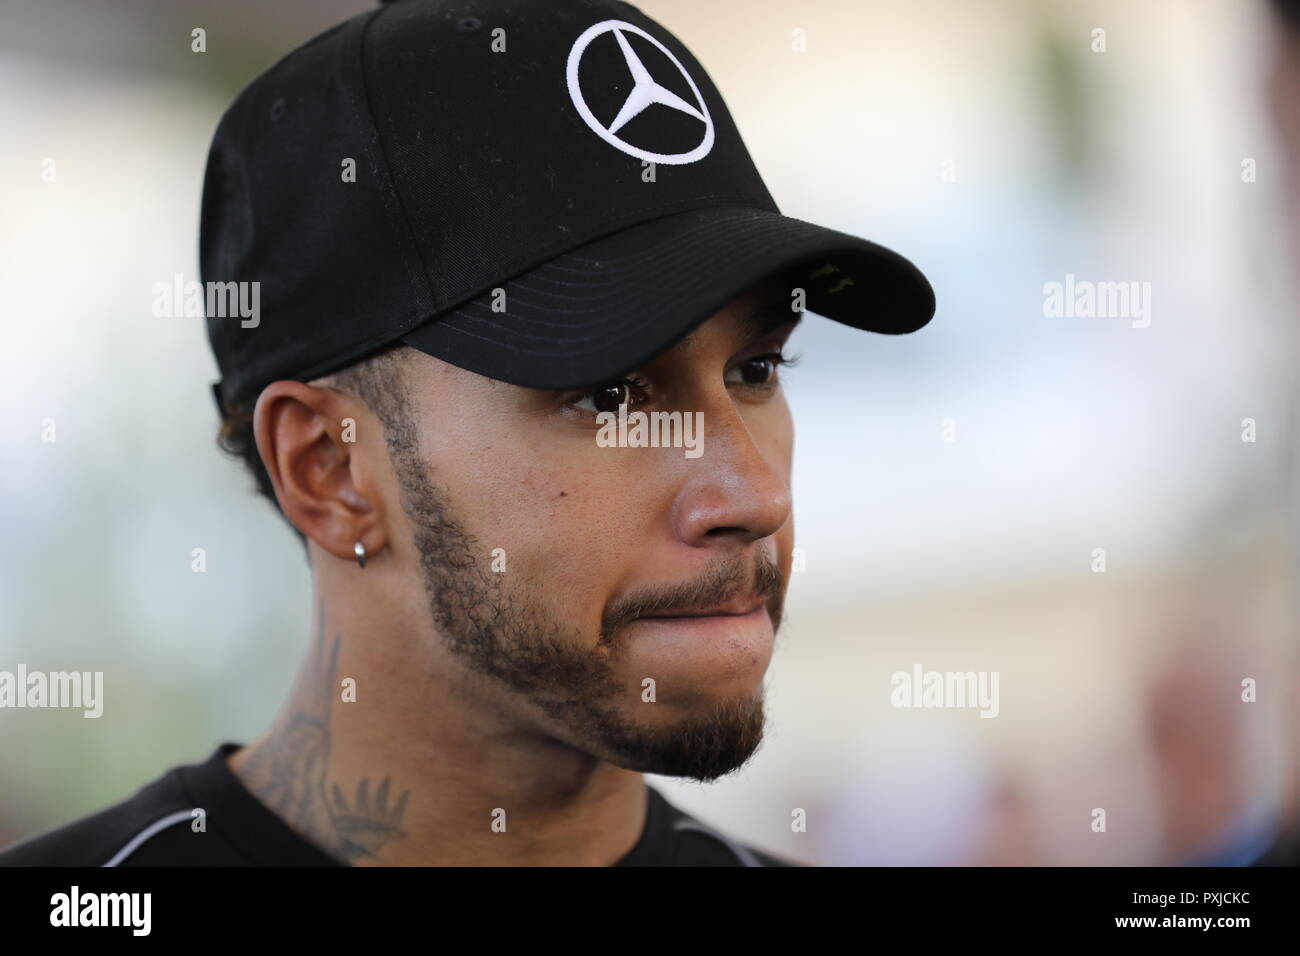 Lewis Hamilton portrait Stock Photo